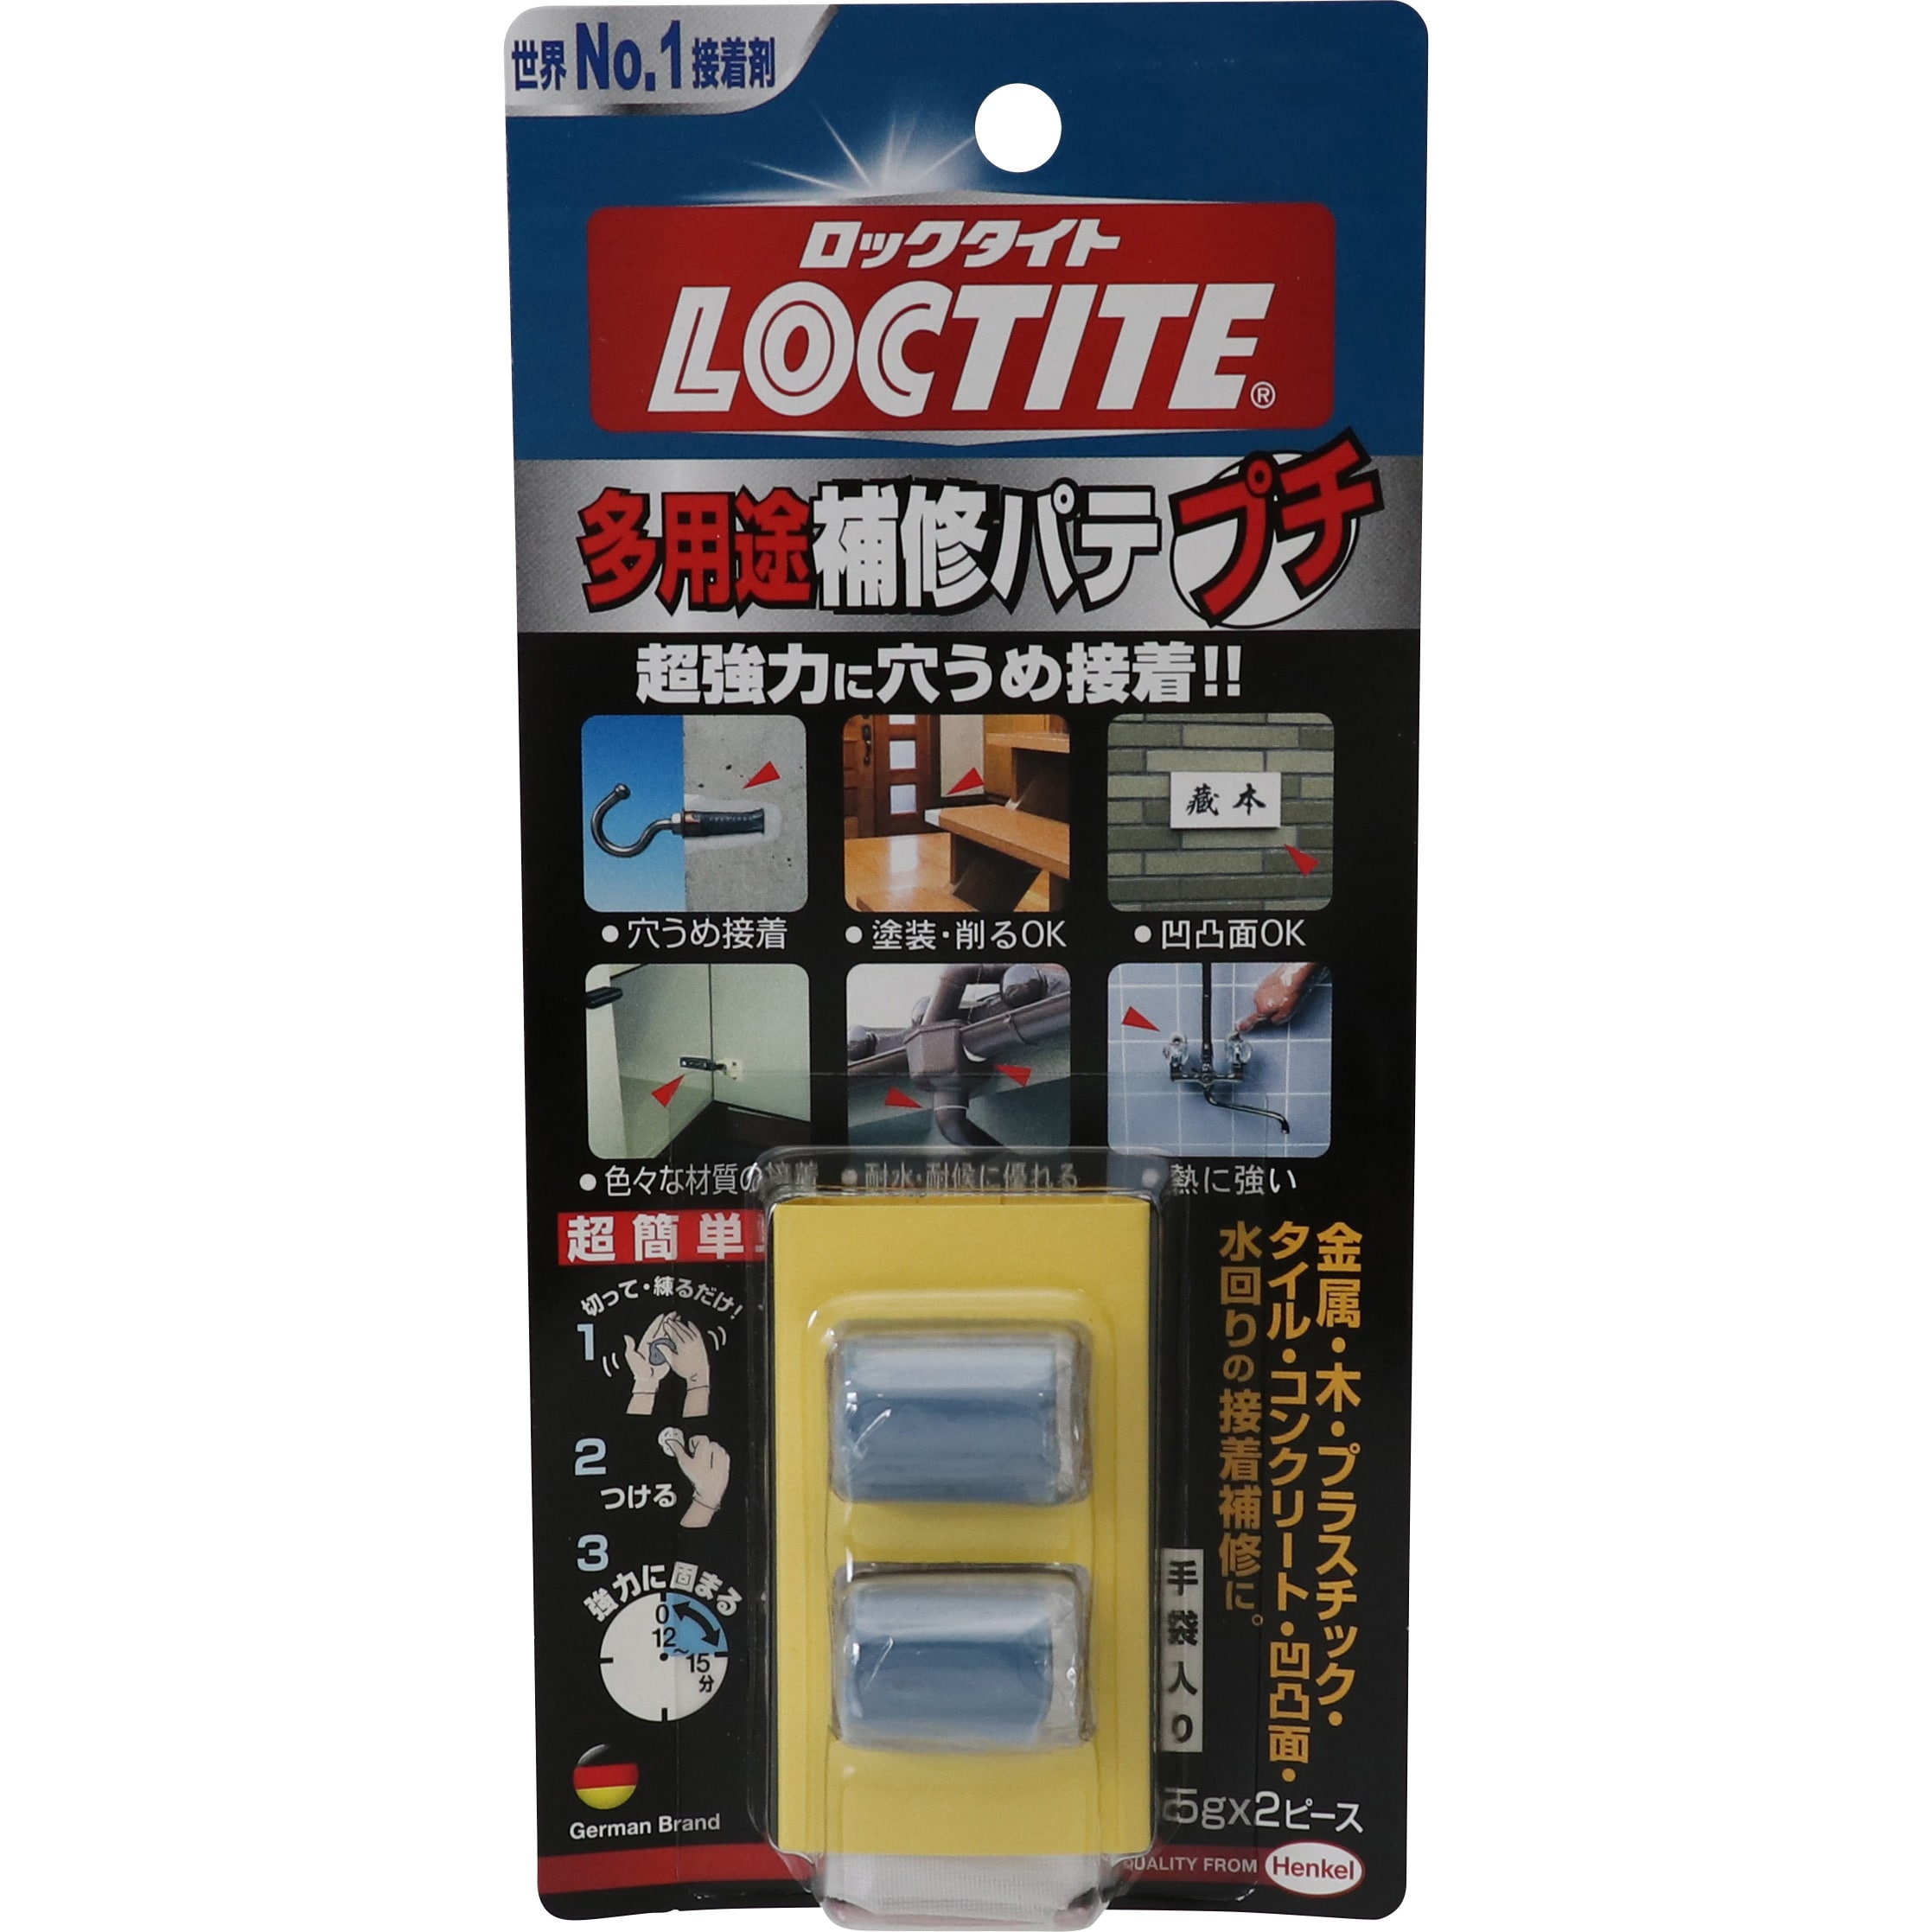 LOCTITE(ロックタイト) 多用途補修パテ 48G DHP-481 10個入り - 接着剤